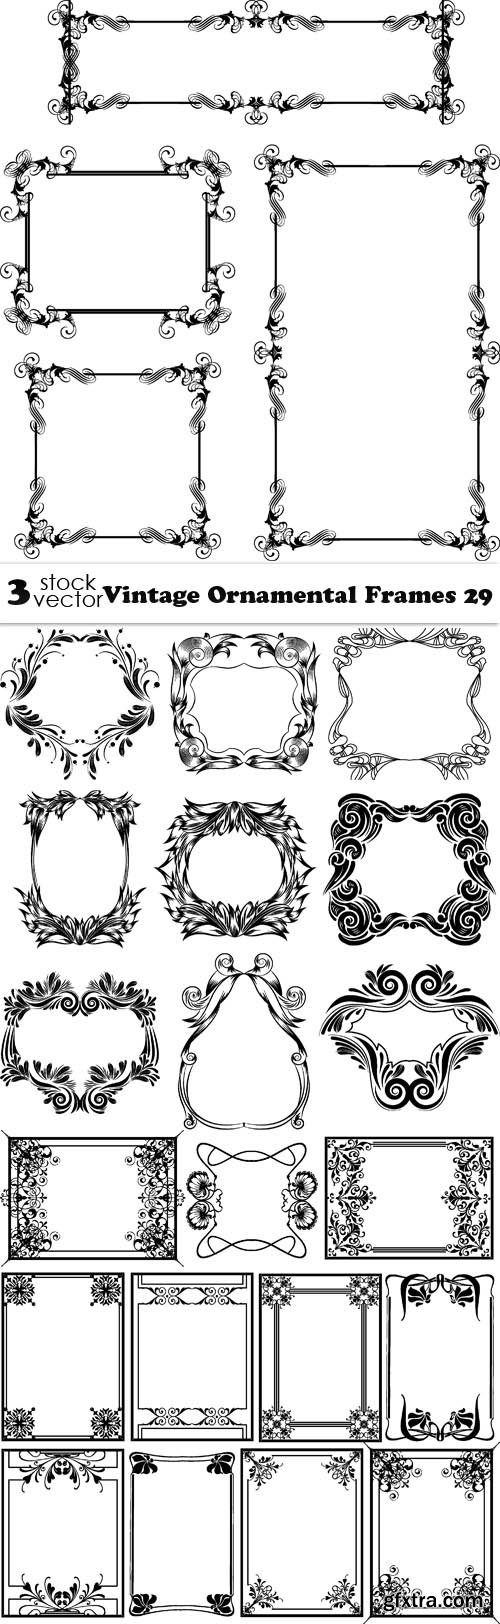 Vectors - Vintage Ornamental Frames 29